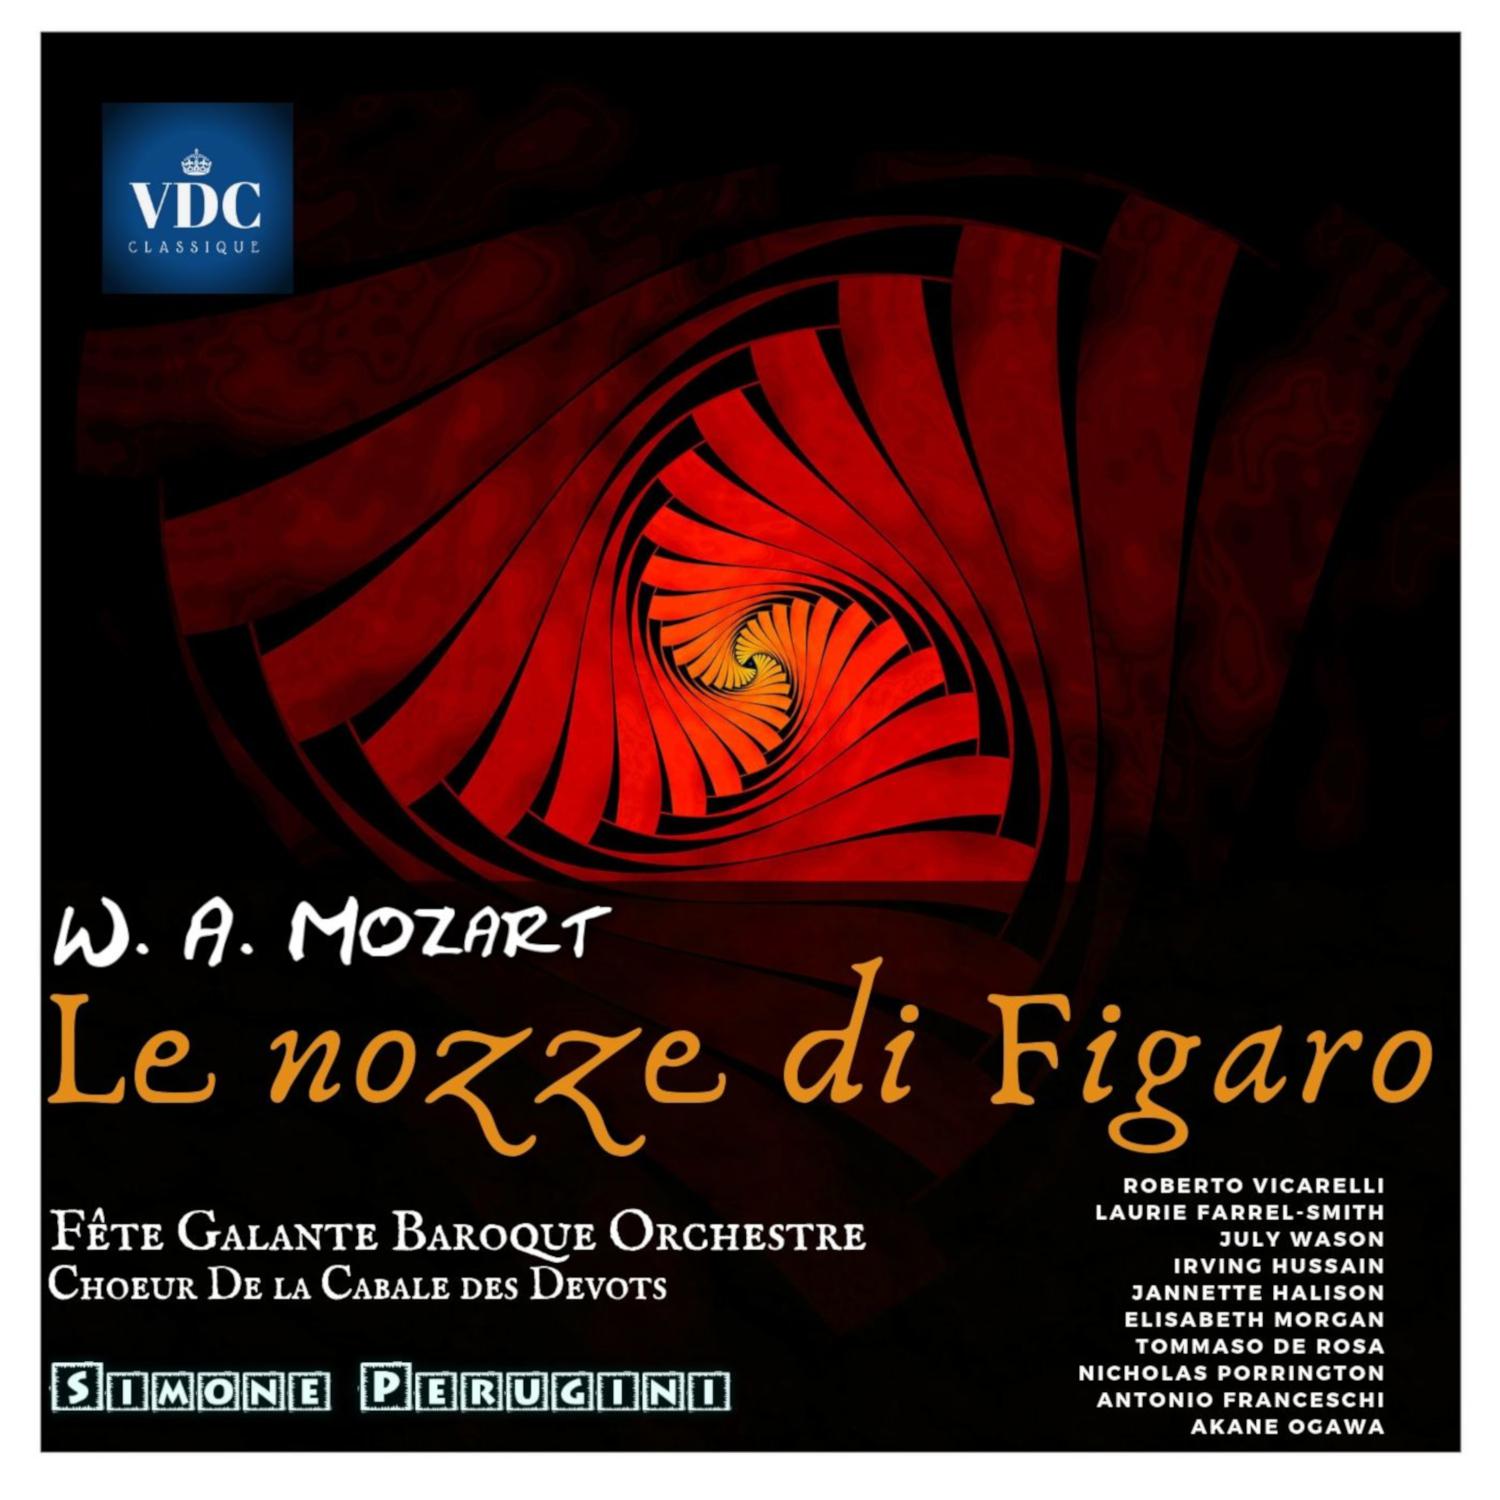 Simone Perugini - Le nozze di Figaro, Act IV Scene 2: Barbarina cos'hai?